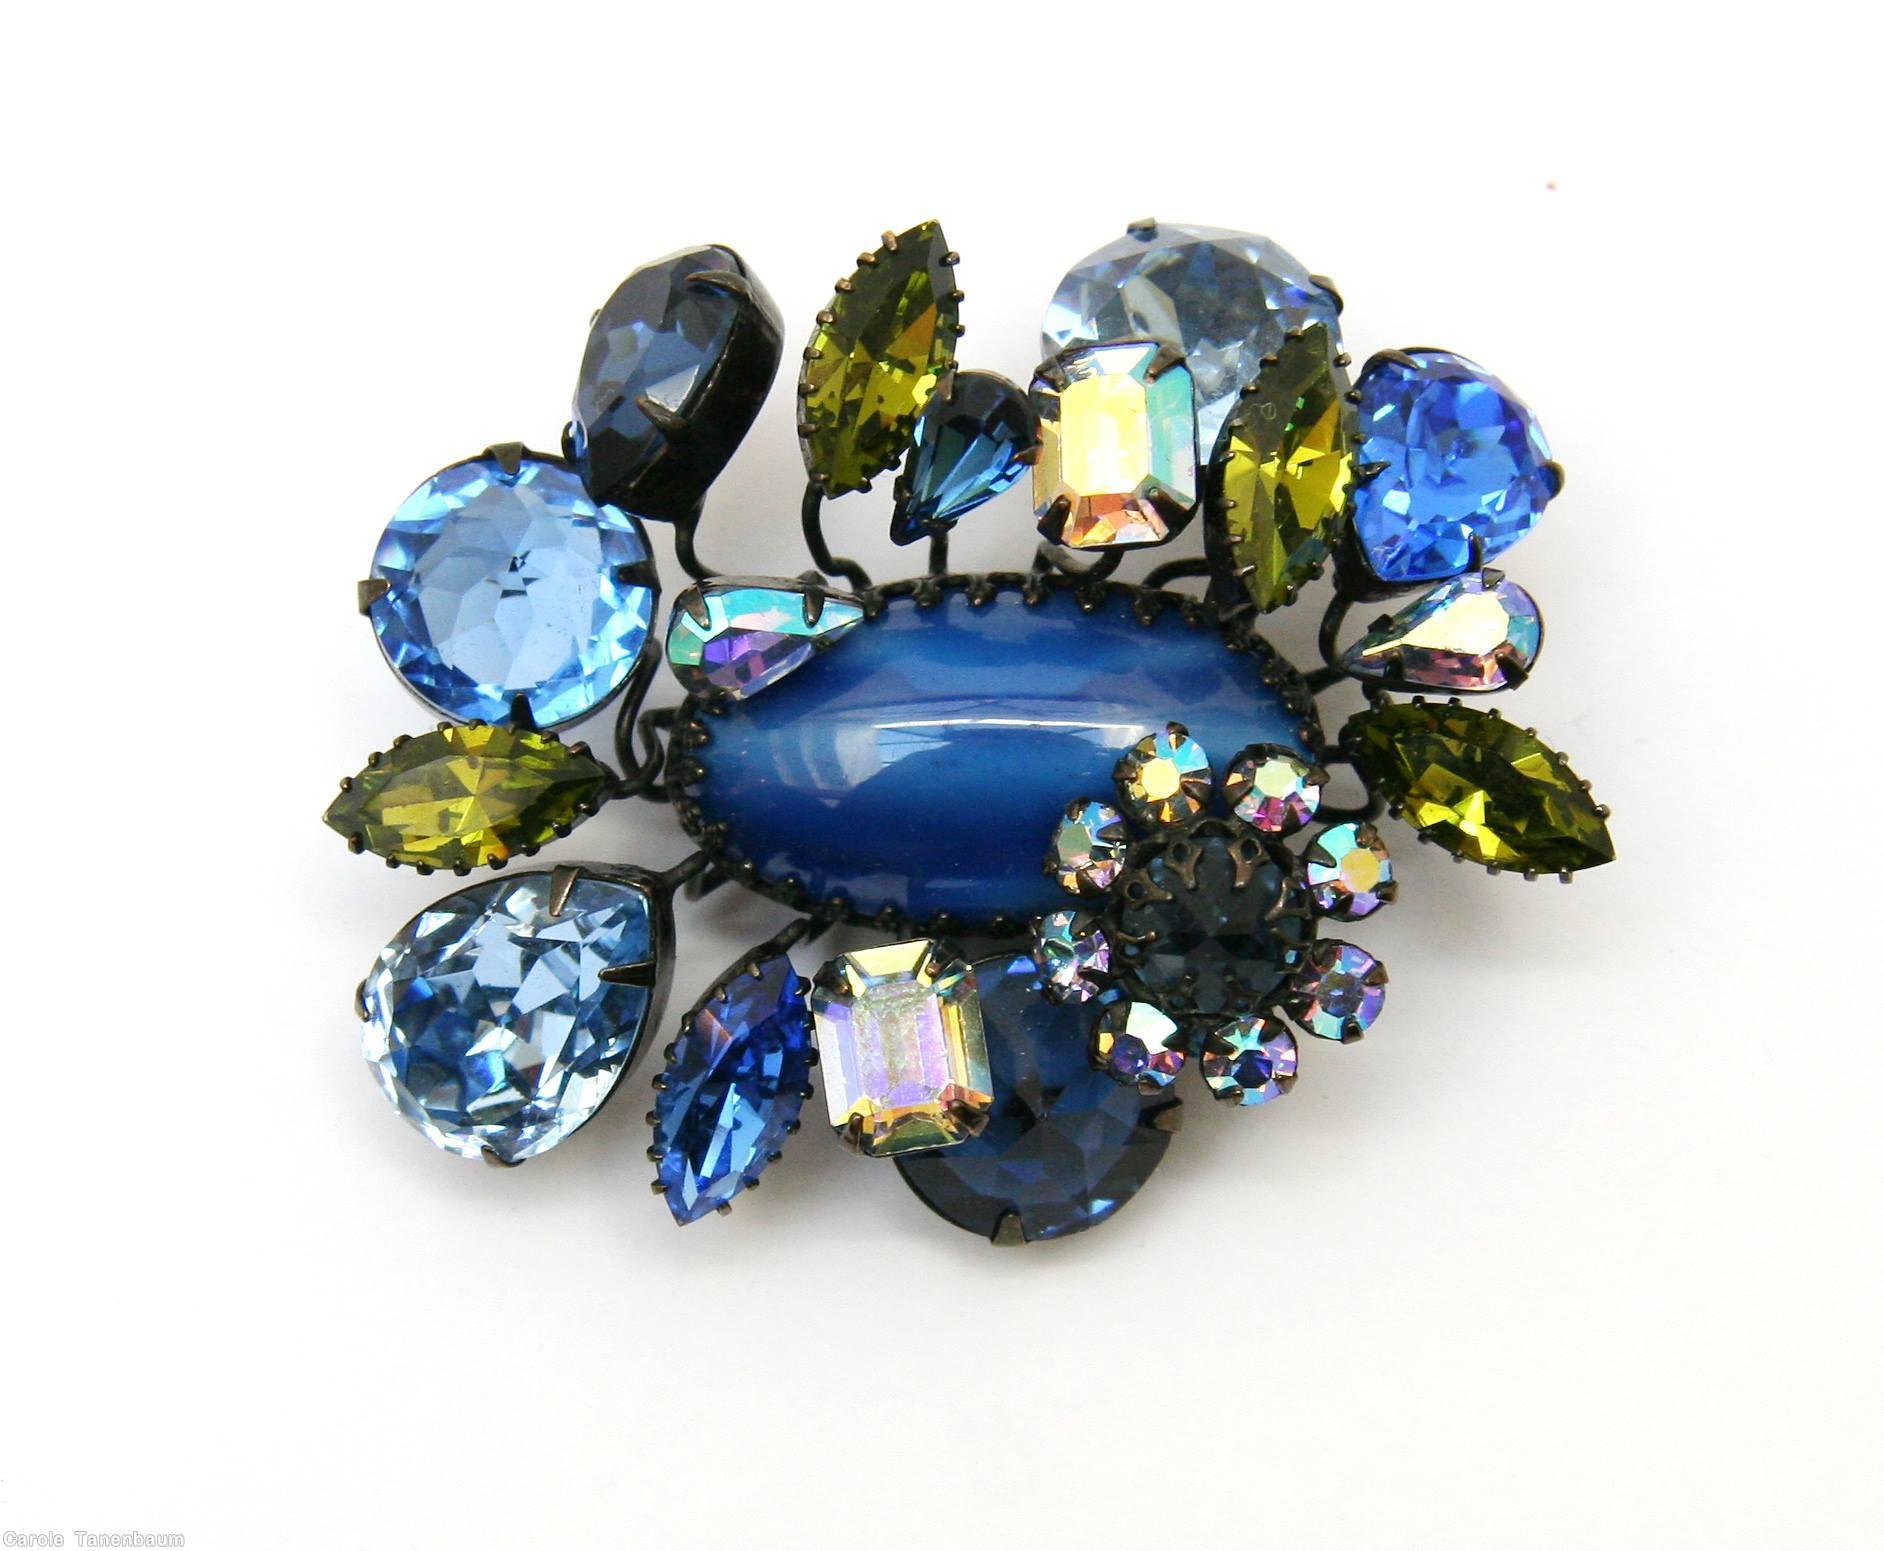 Schreiner many branch 1 flower sprawling large oval center pin blue marina blue peridot ab crystal smoke jewelry